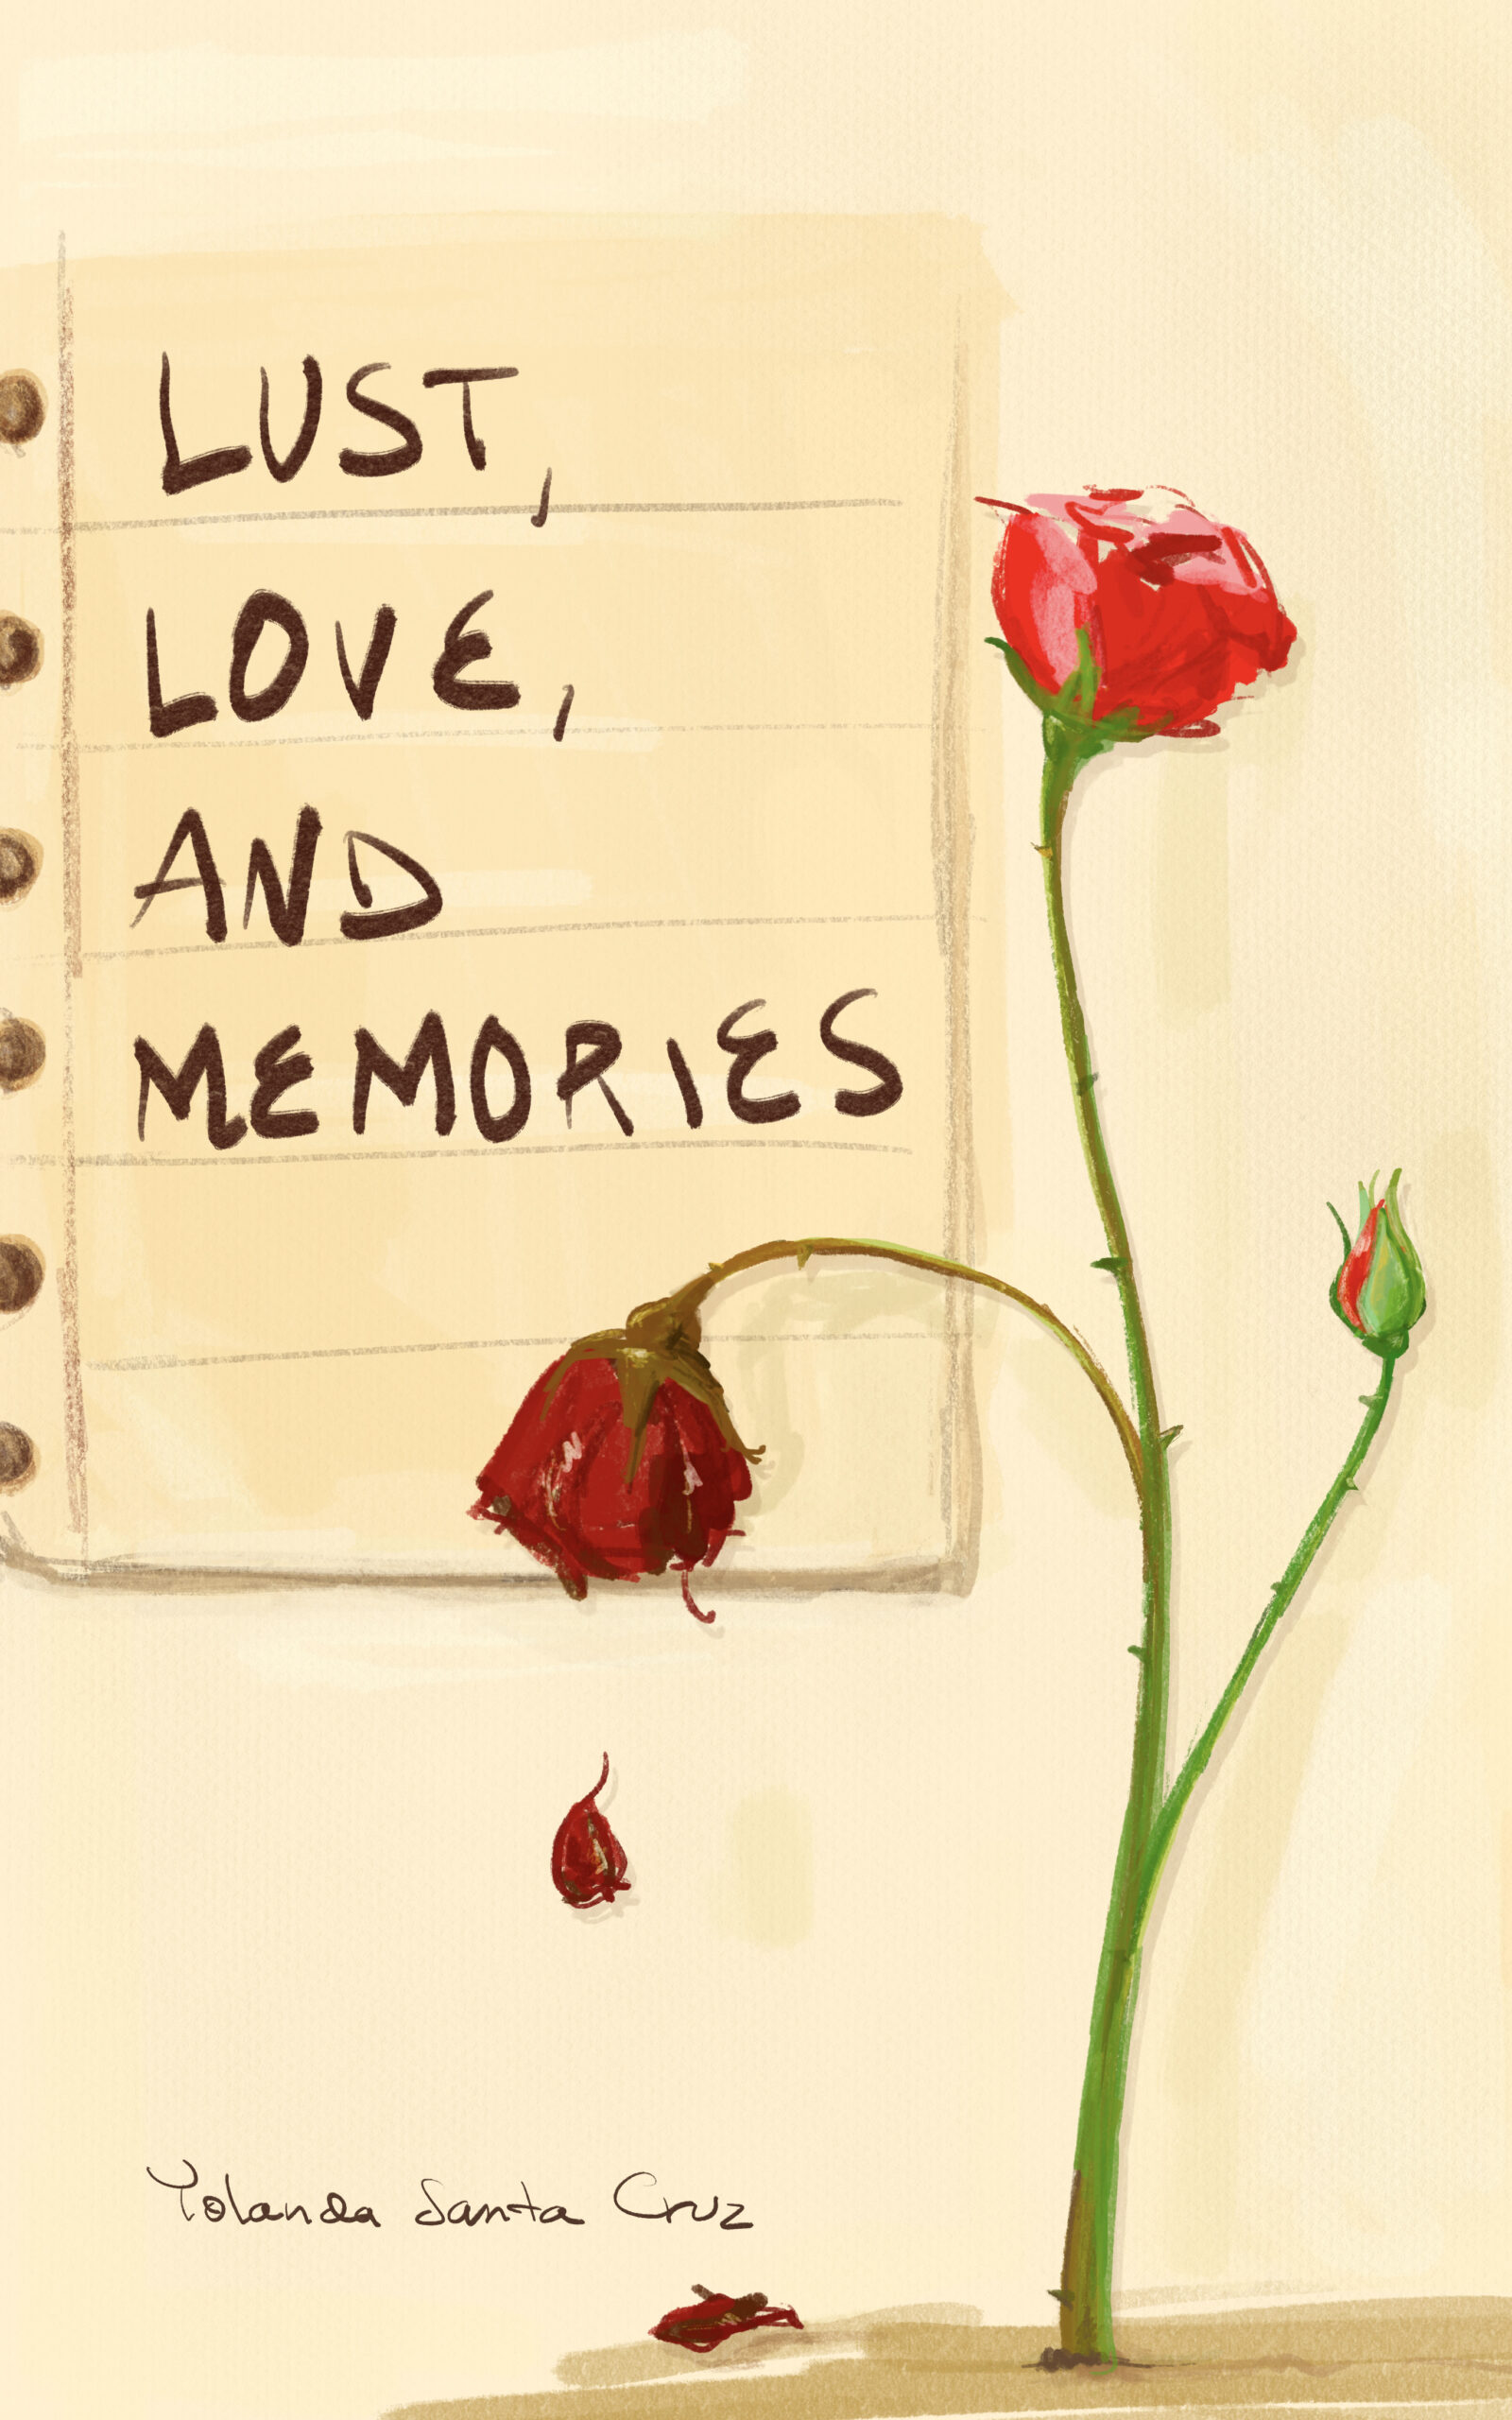 FREE: Lust, Love, and Memories by Yolanda Santa Cruz